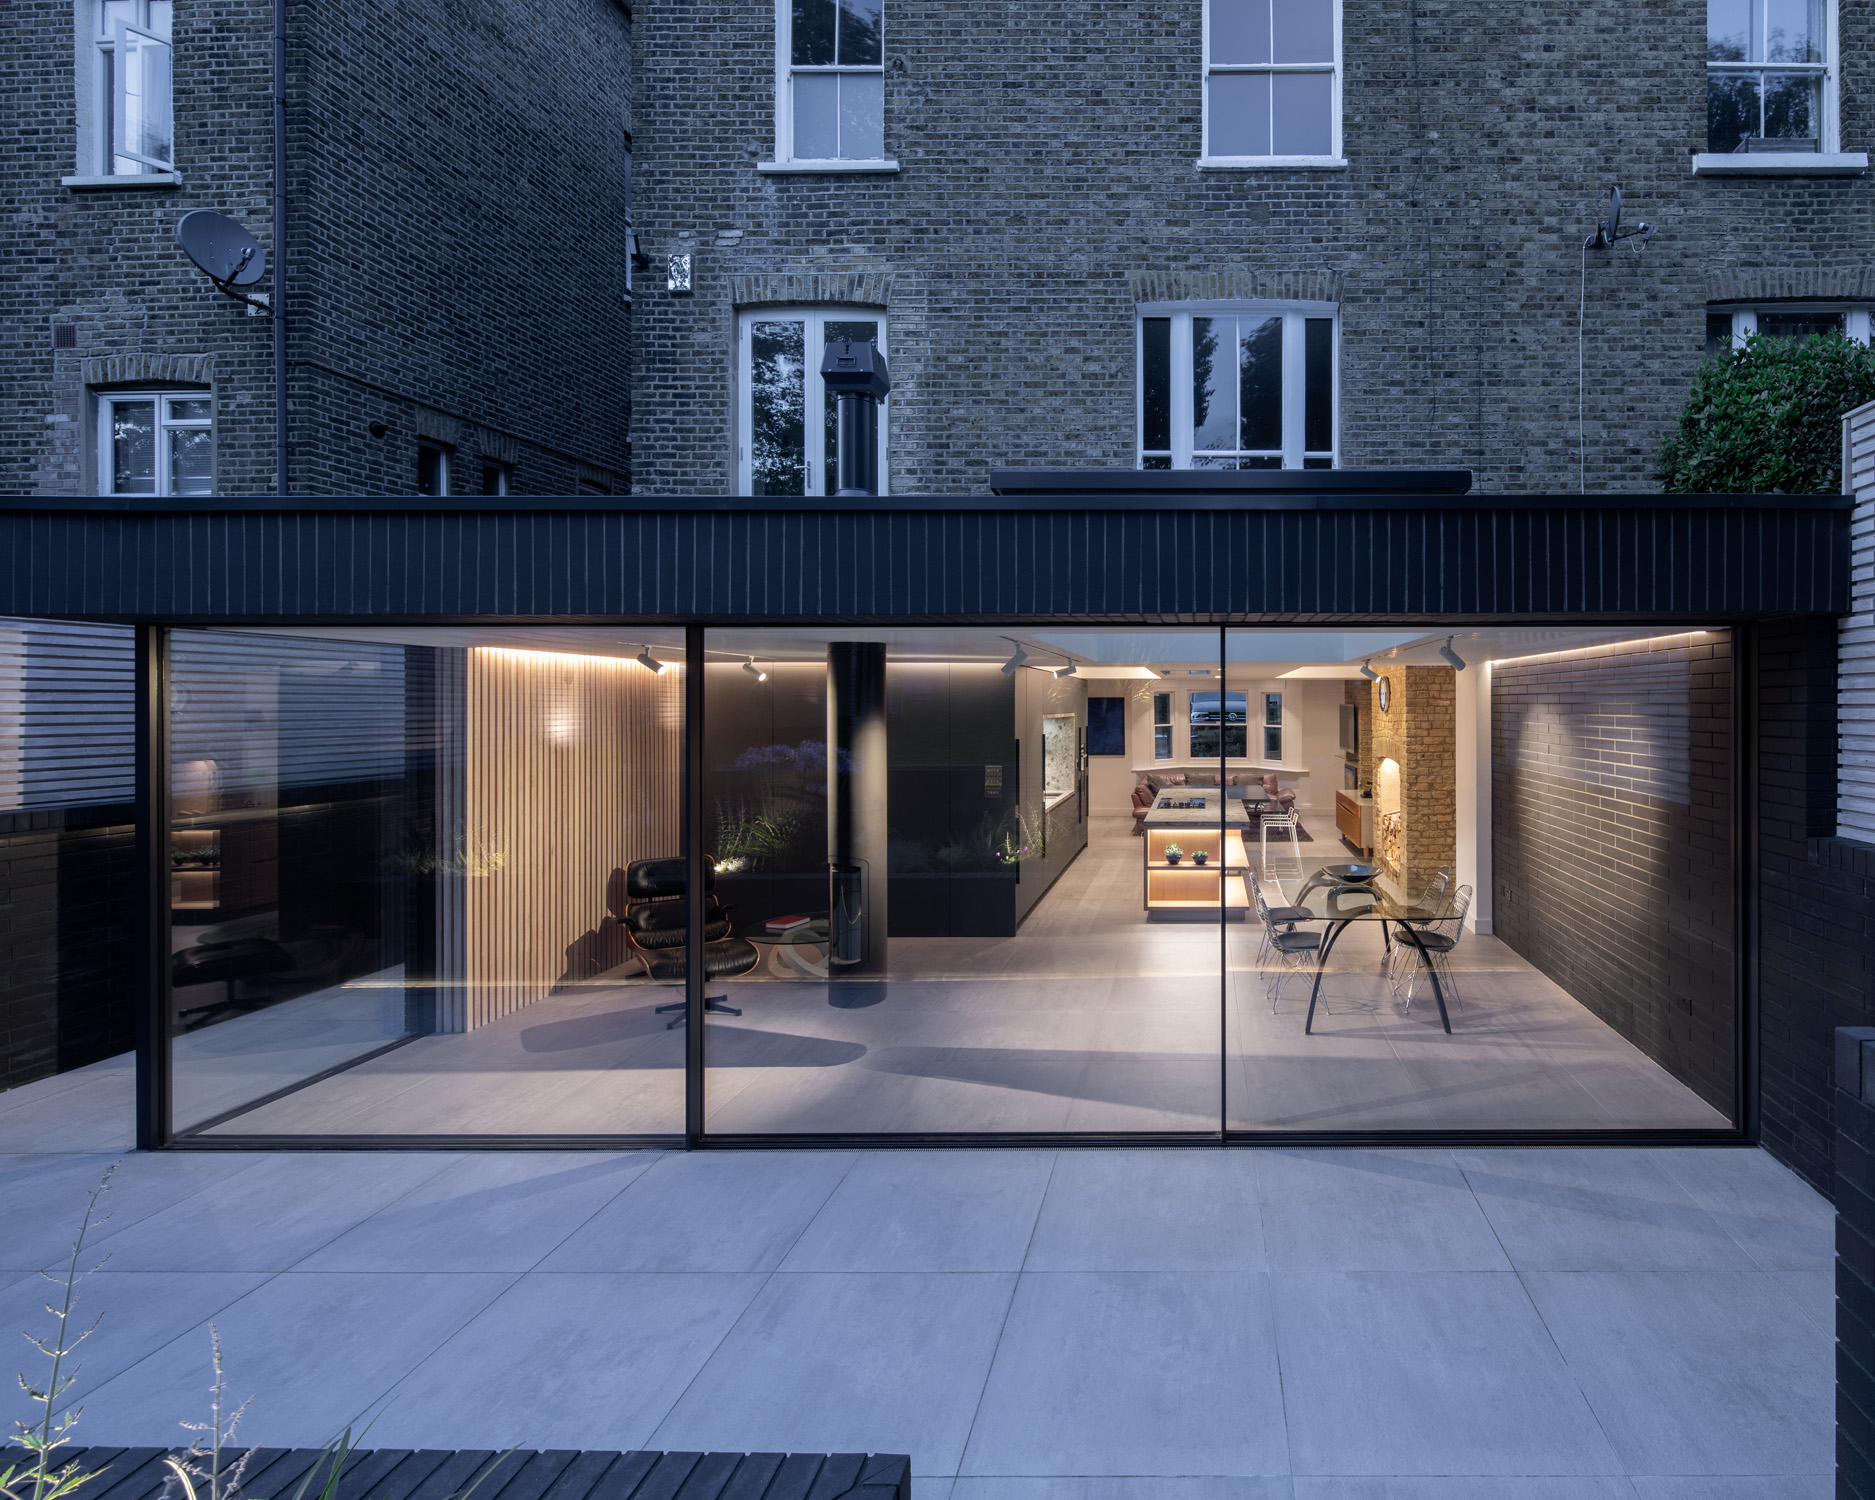 Garden by Proctor & Shaw - minimalist contemporary architecture and interior design in London